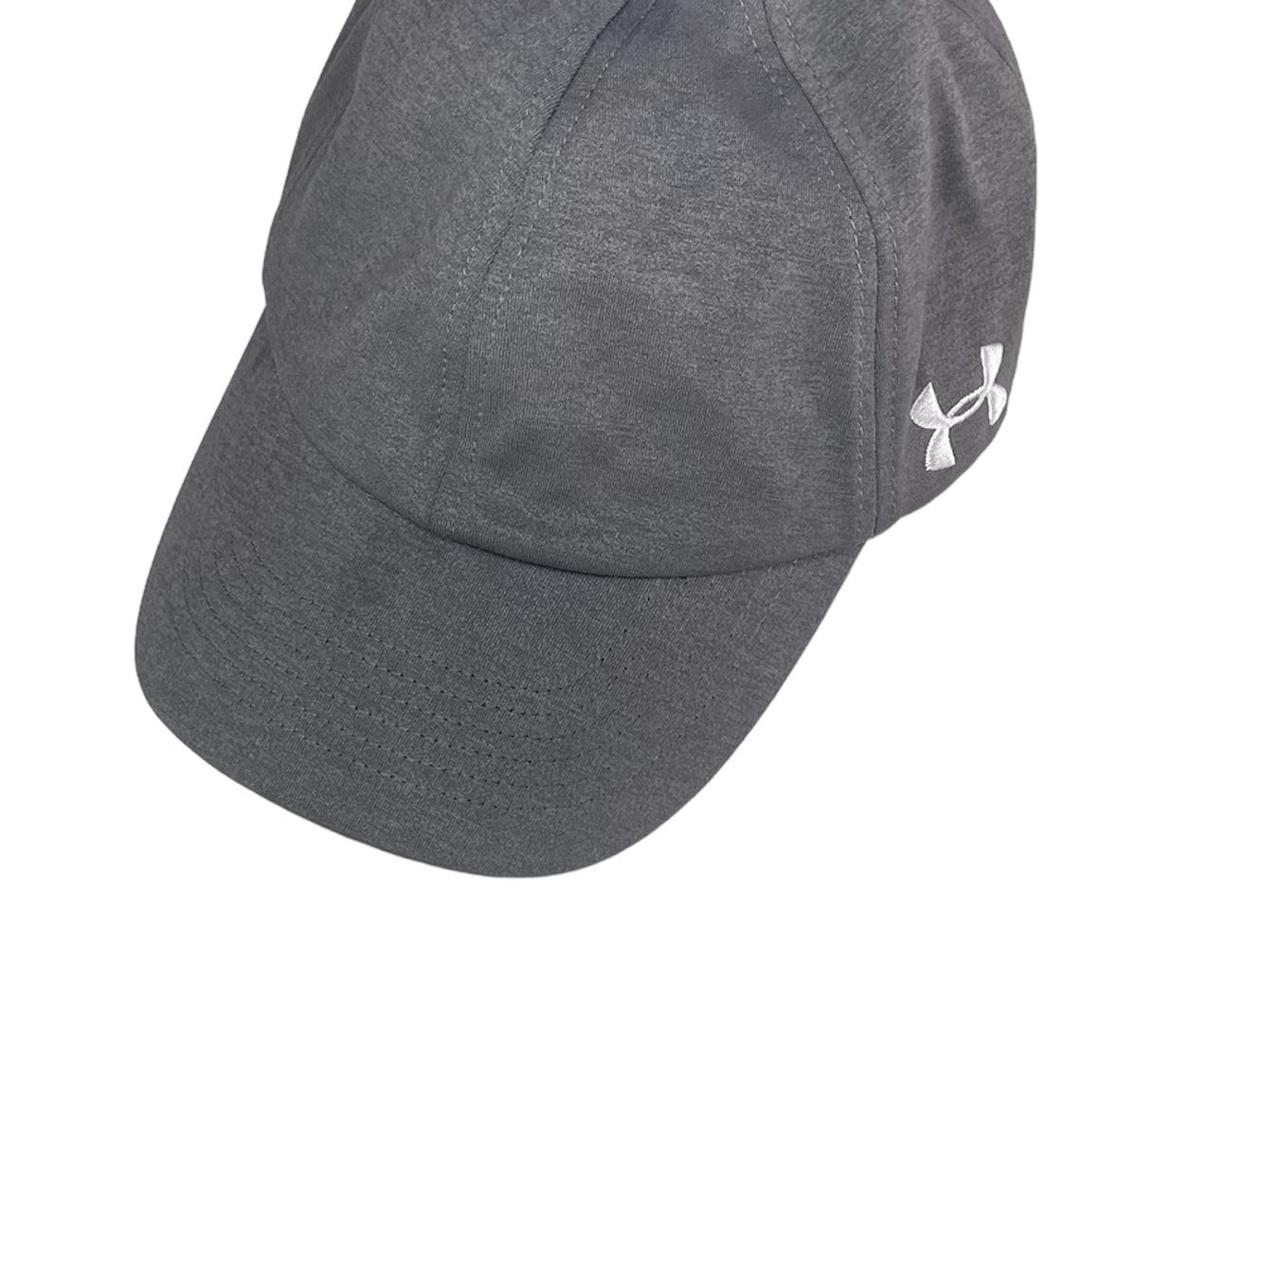 Womens under armor adjustable hat cap grey white - Depop